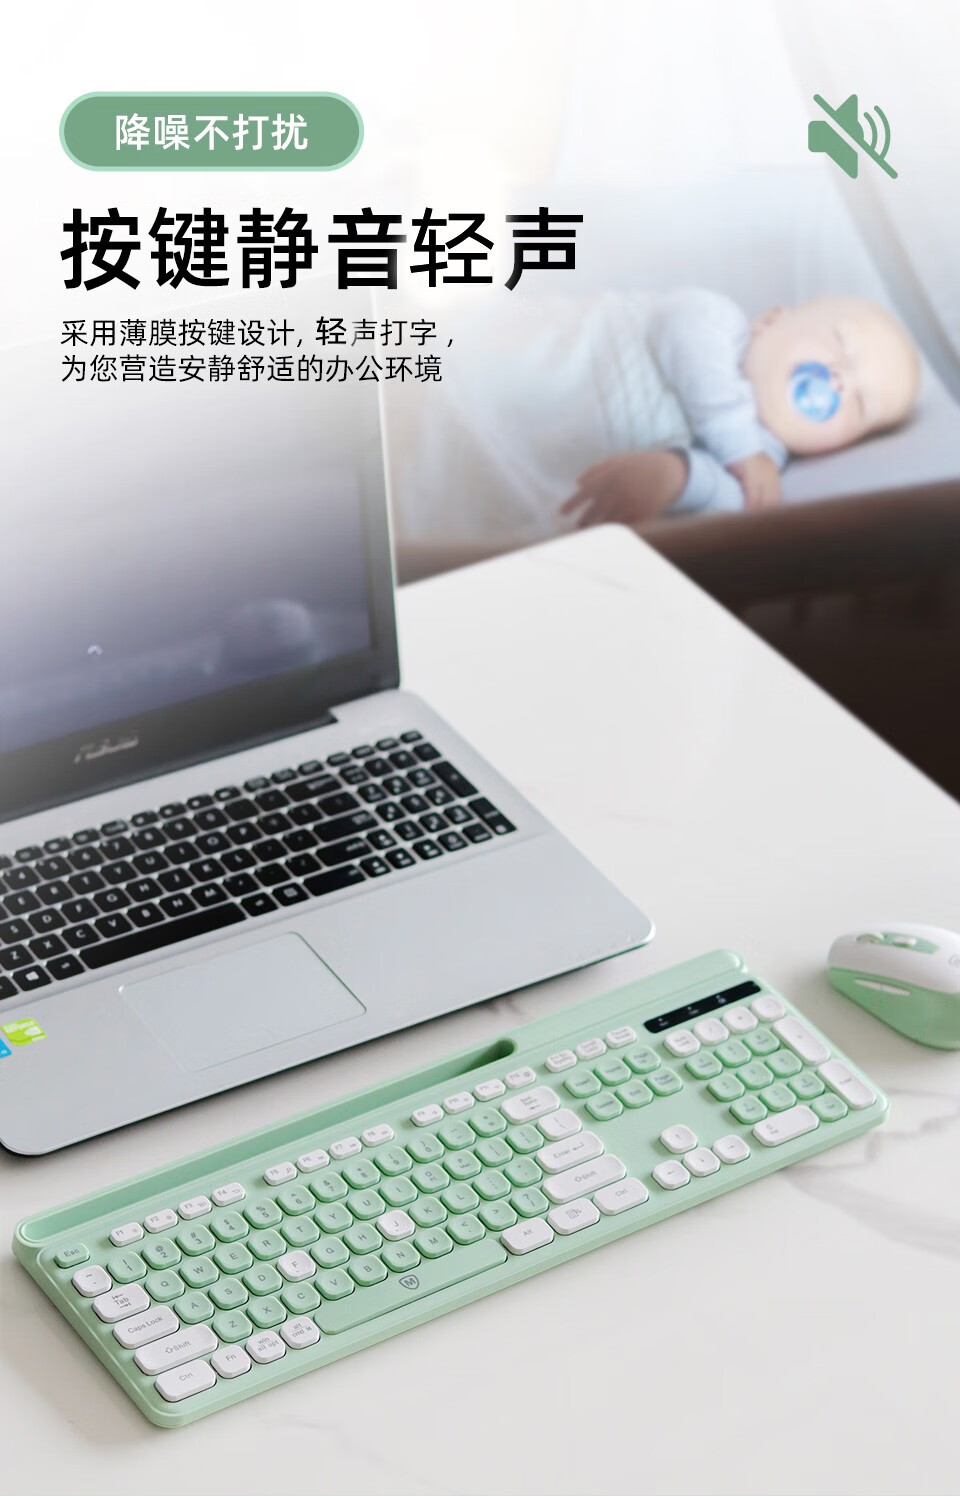 MiCRPACK 迈可派克 无线键鼠套装 无线键盘 键盘无线 静音键盘 办公键盘 【青苹菓】